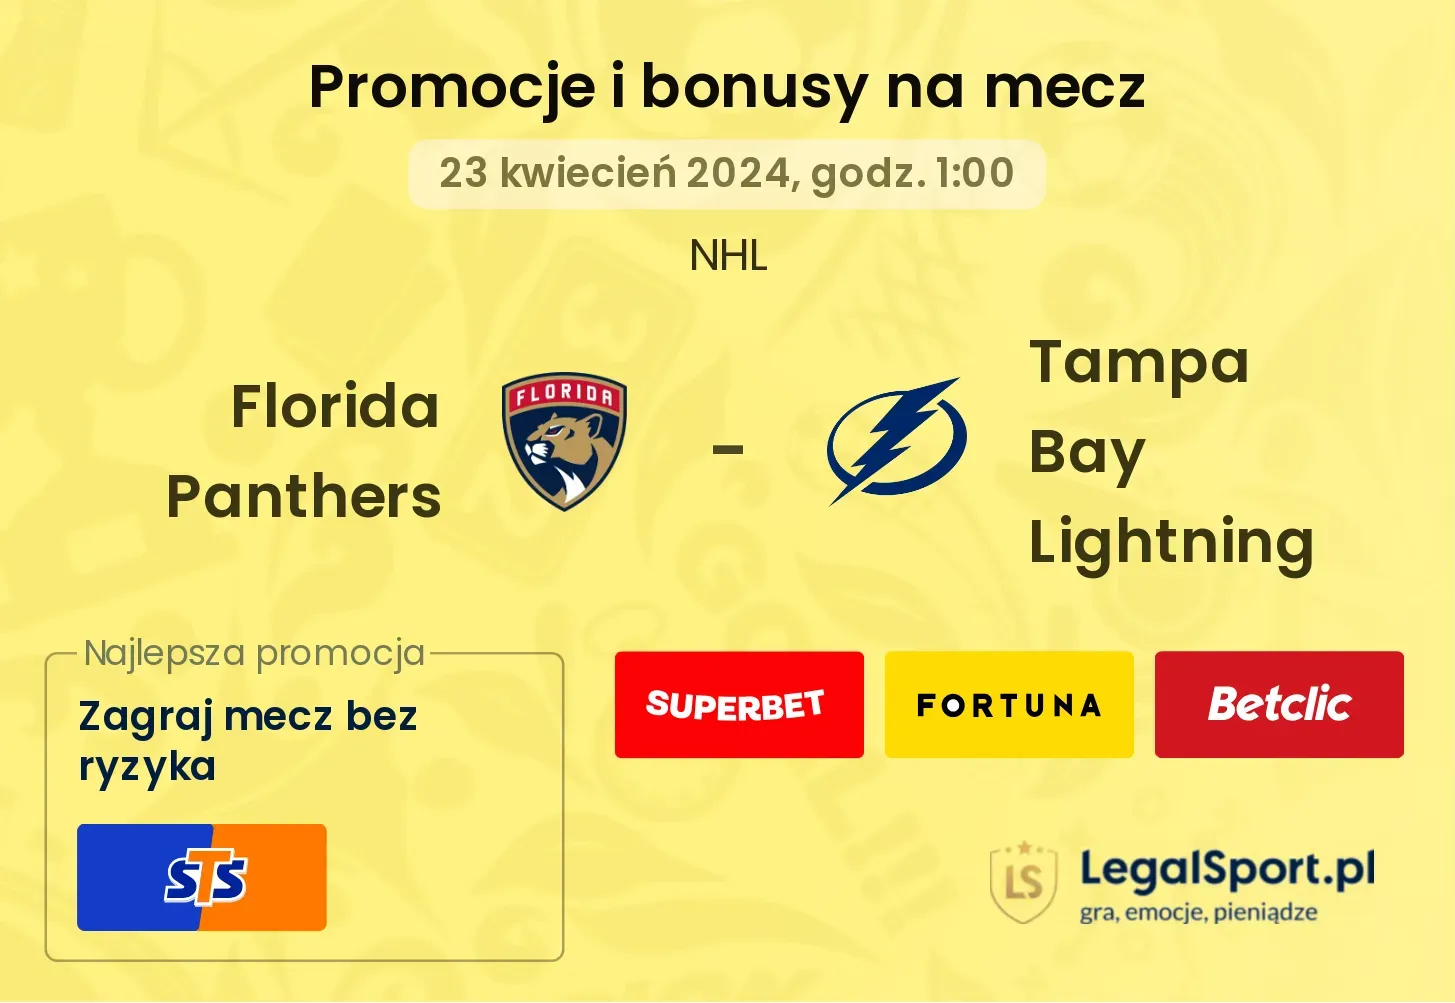 Florida Panthers - Tampa Bay Lightning promocje bonusy na mecz